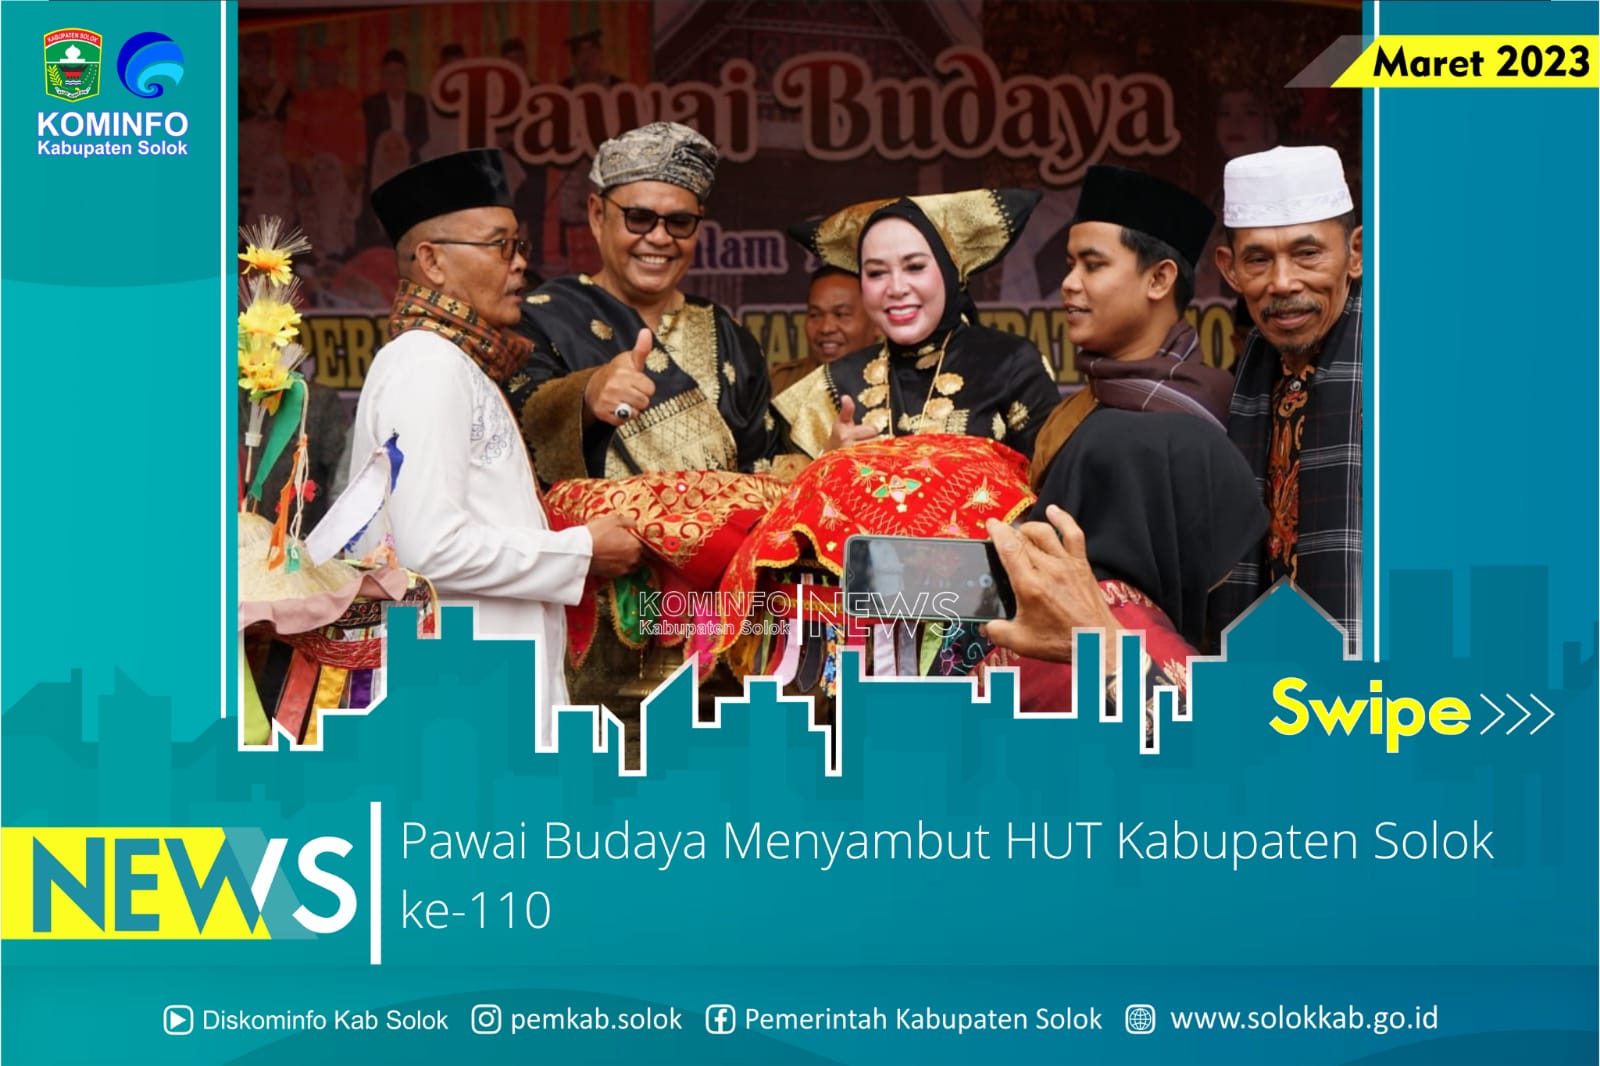 Pawai Budaya Menyambut HUT Kabupaten Solok ke-110.